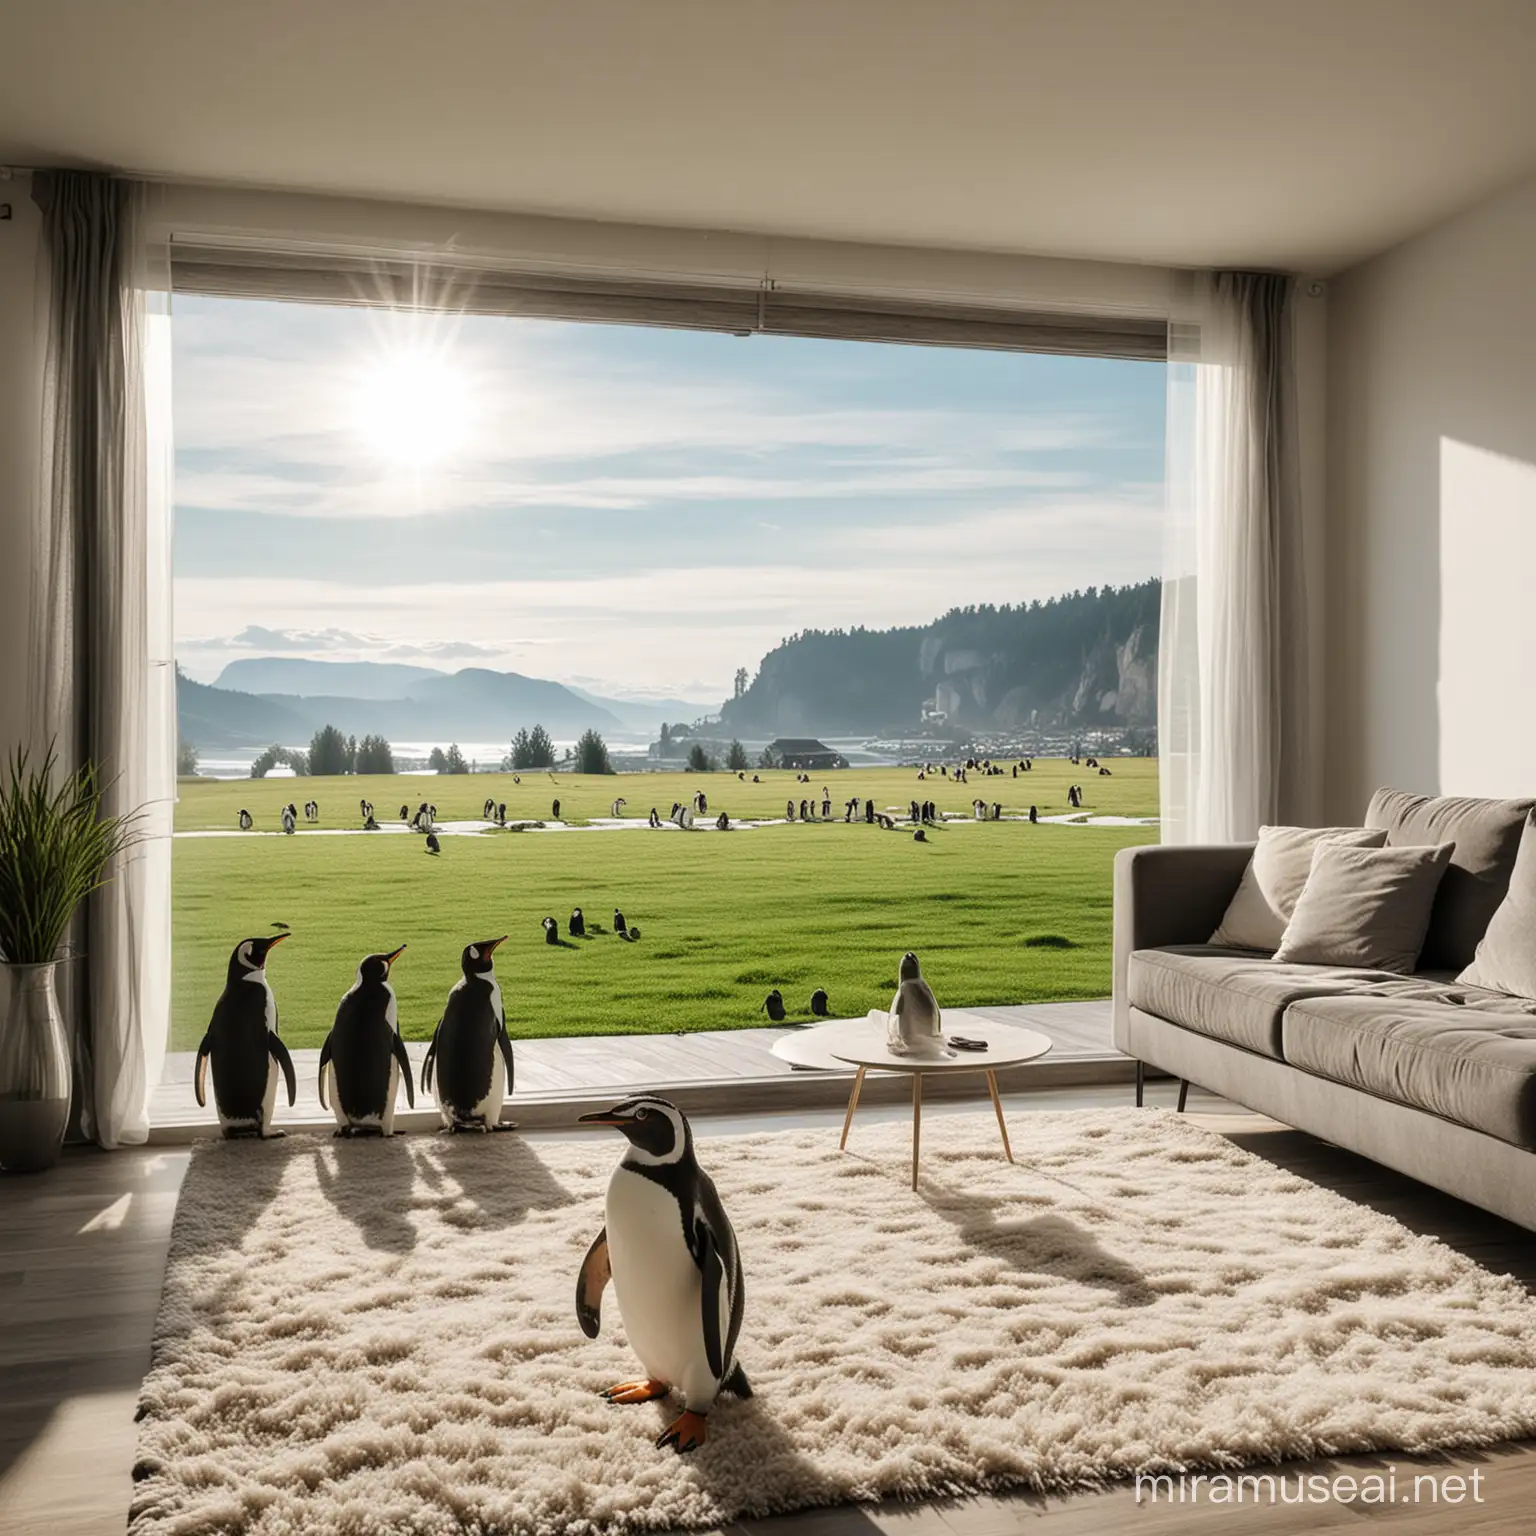 Penguins Enjoying Summer in a Sunny Czech Living Room